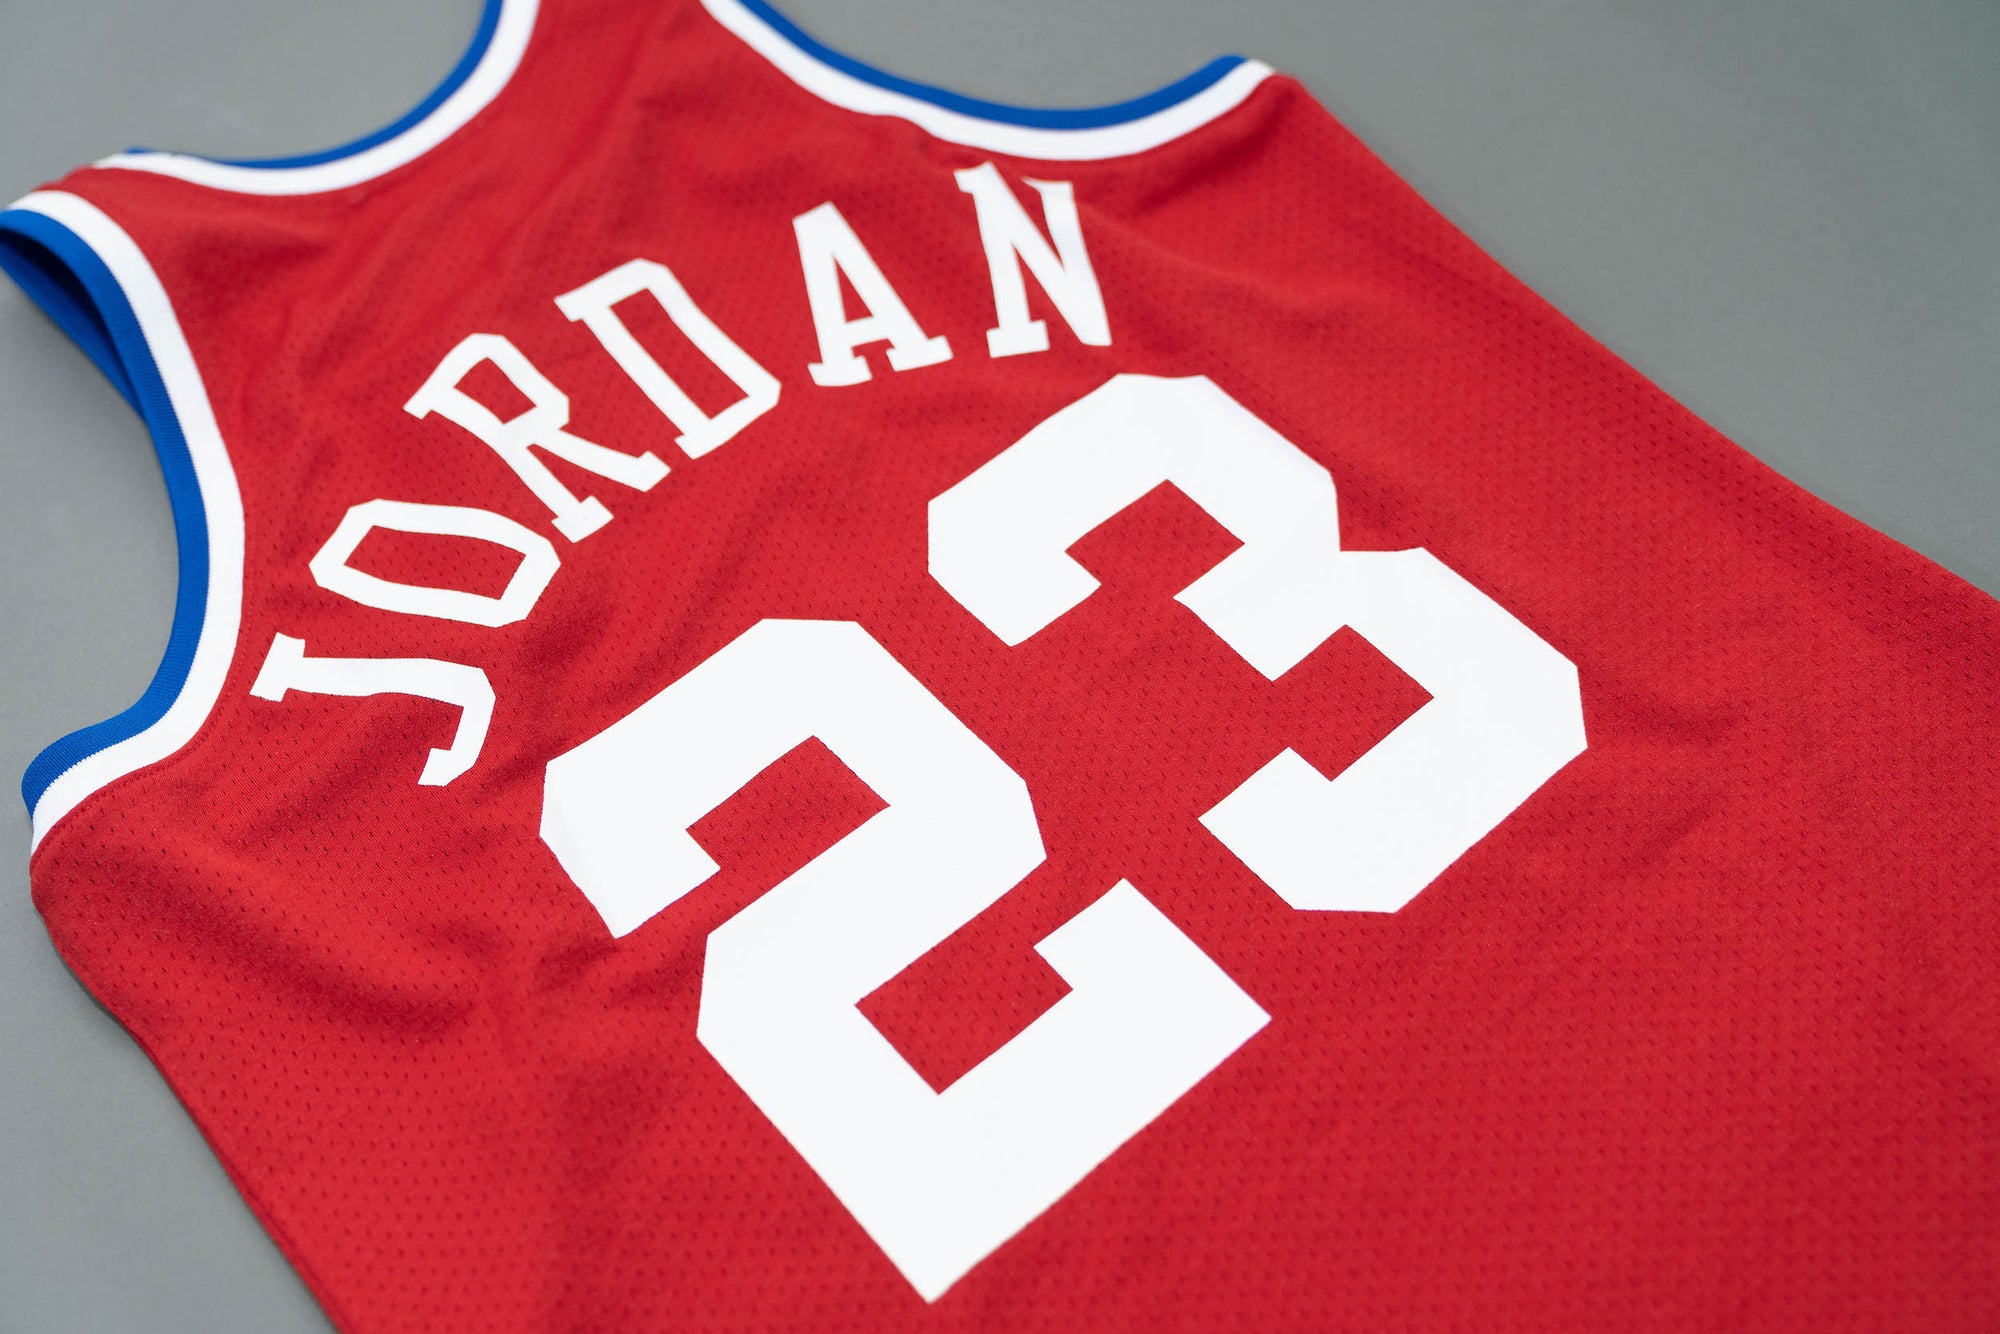 Mitchell & Ness Authentic 1989 Michael Jordan All-Star Jersey